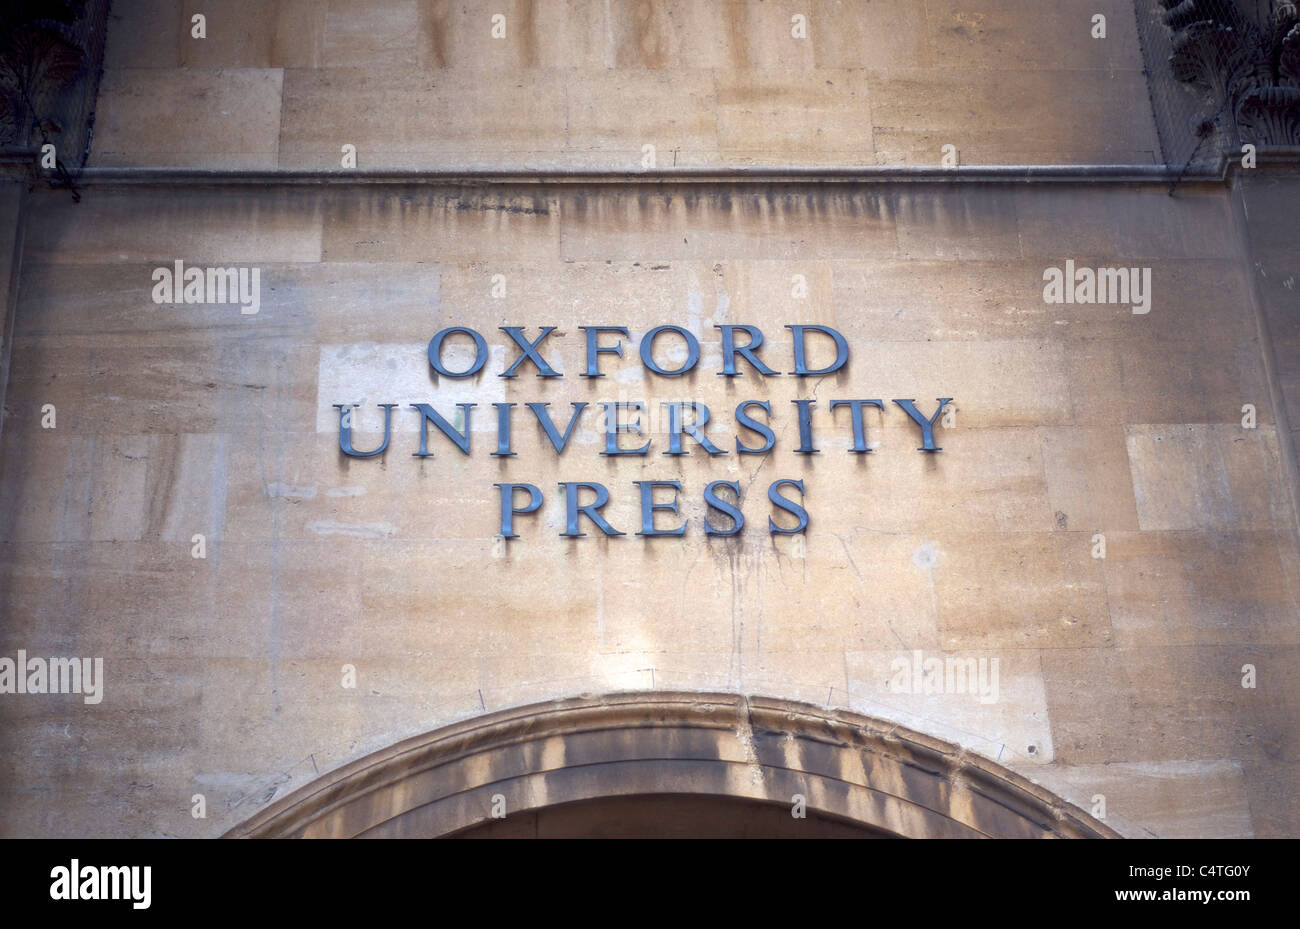 Oxford University Press, Oxford, England, U.K. Stock Photo